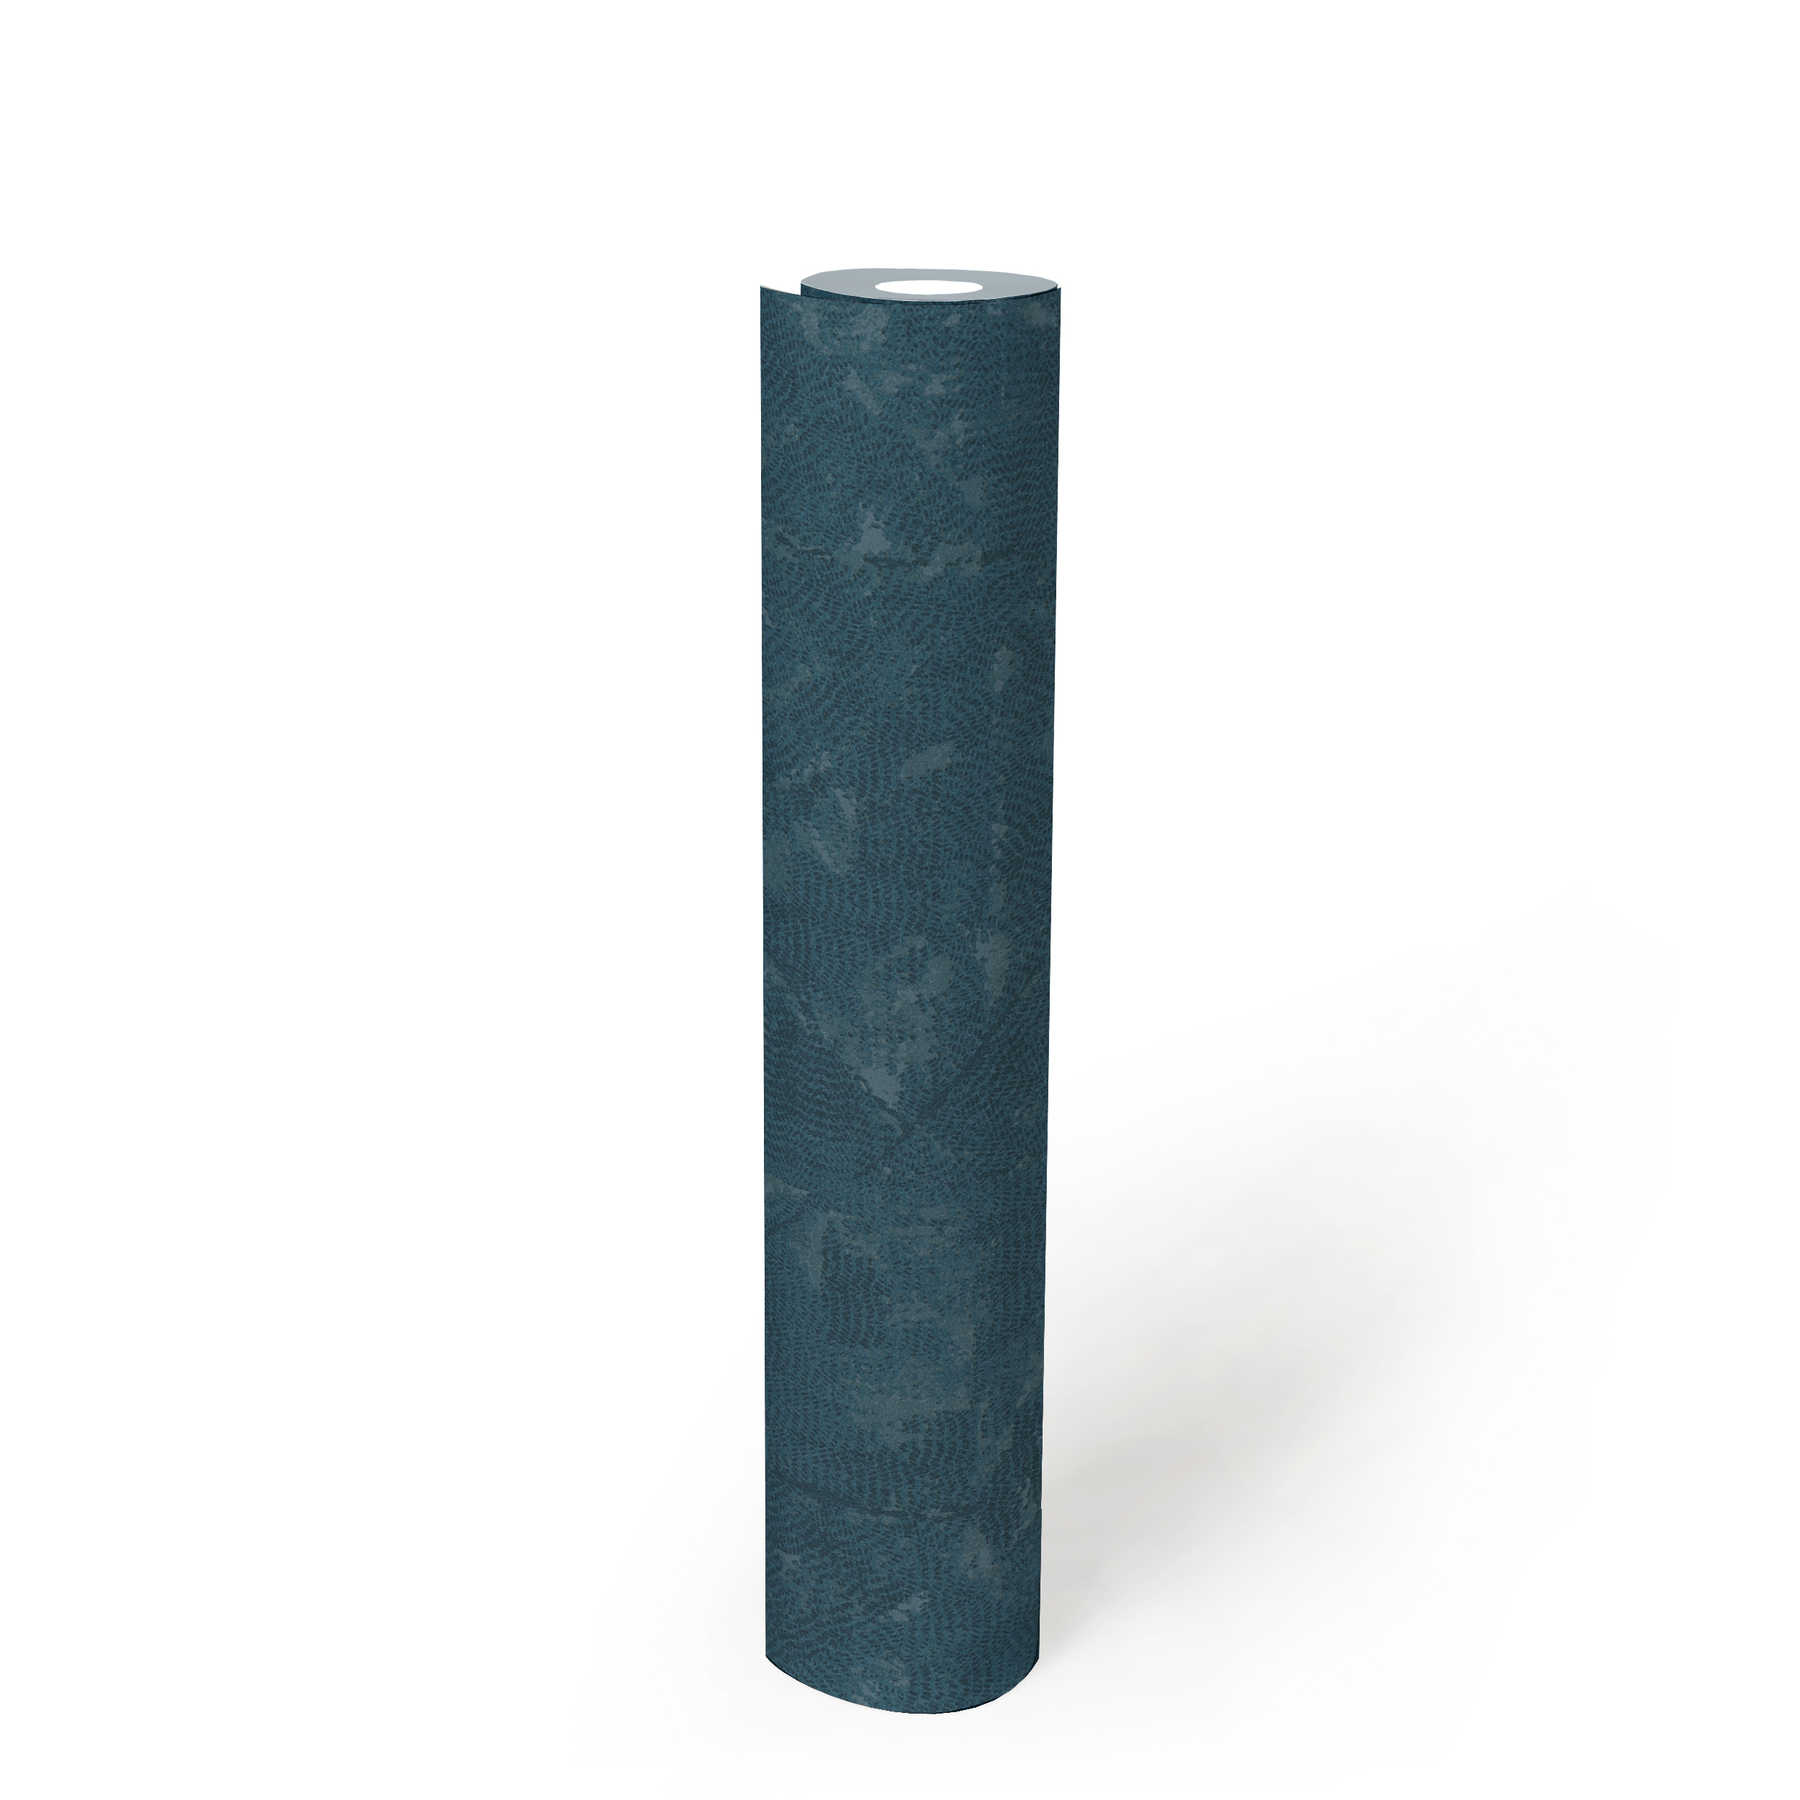             Petrol non-woven wallpaper asymmetrical details - blue, grey
        